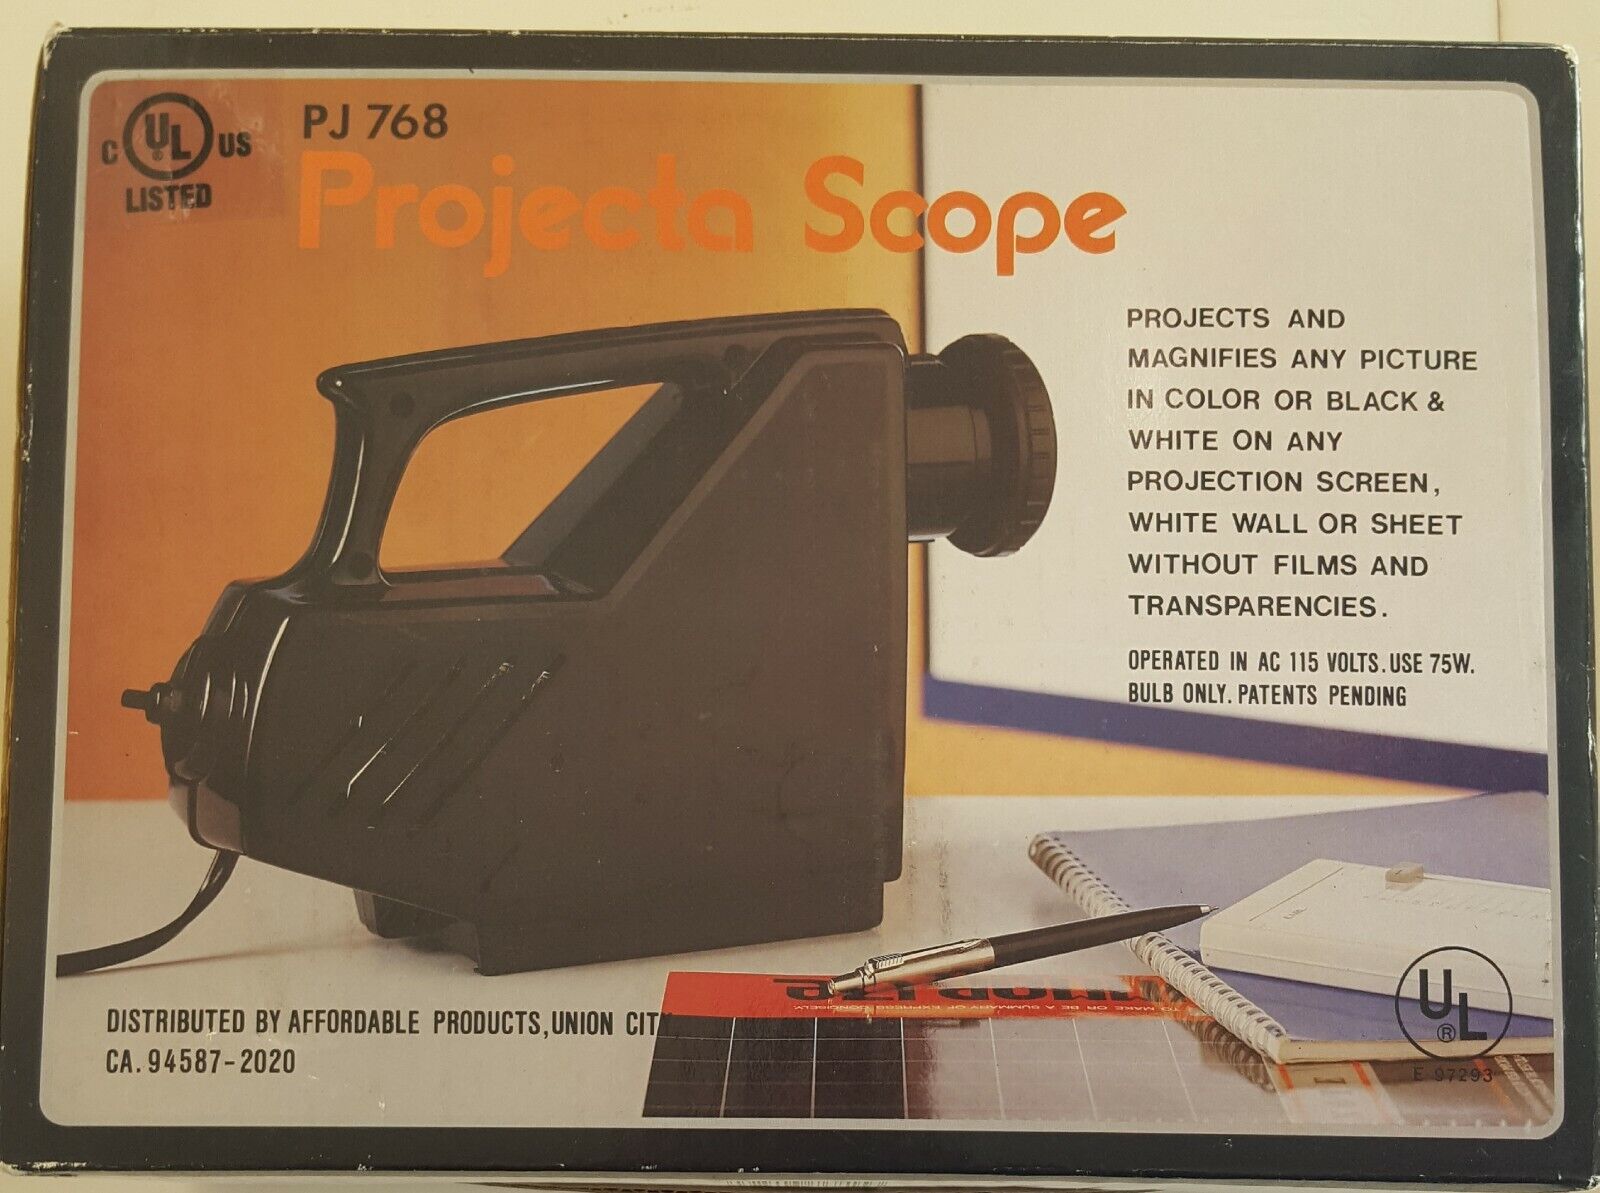 Vintage Projecta Scope Model Pj 768 Original Box, Tested